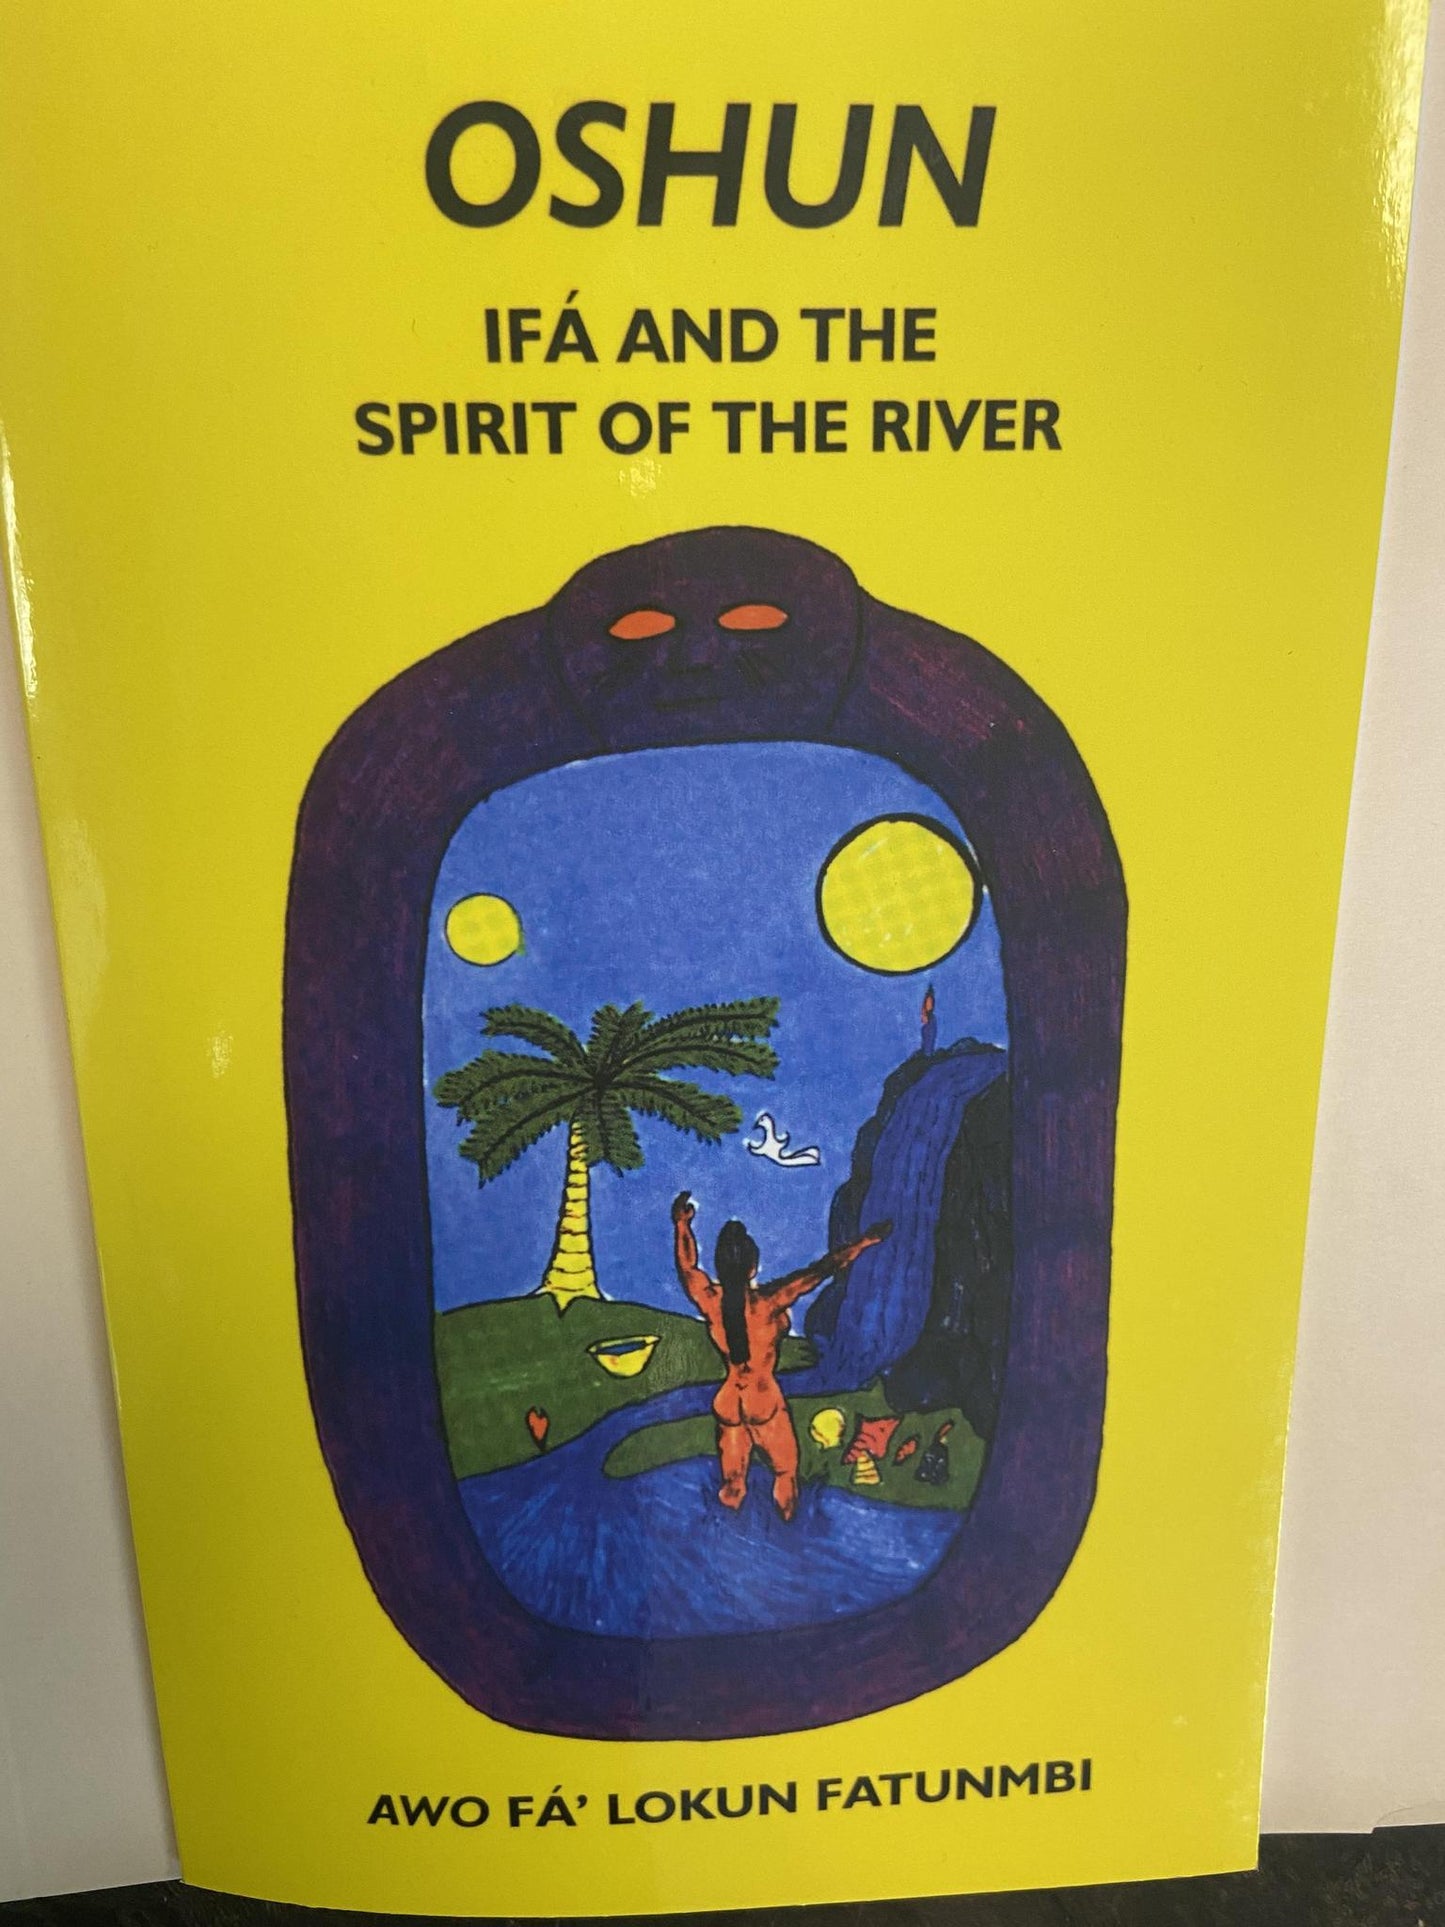 "Oshun: IFA and The Spirit of the River" by Awo Fá Lokun Fátunmbi